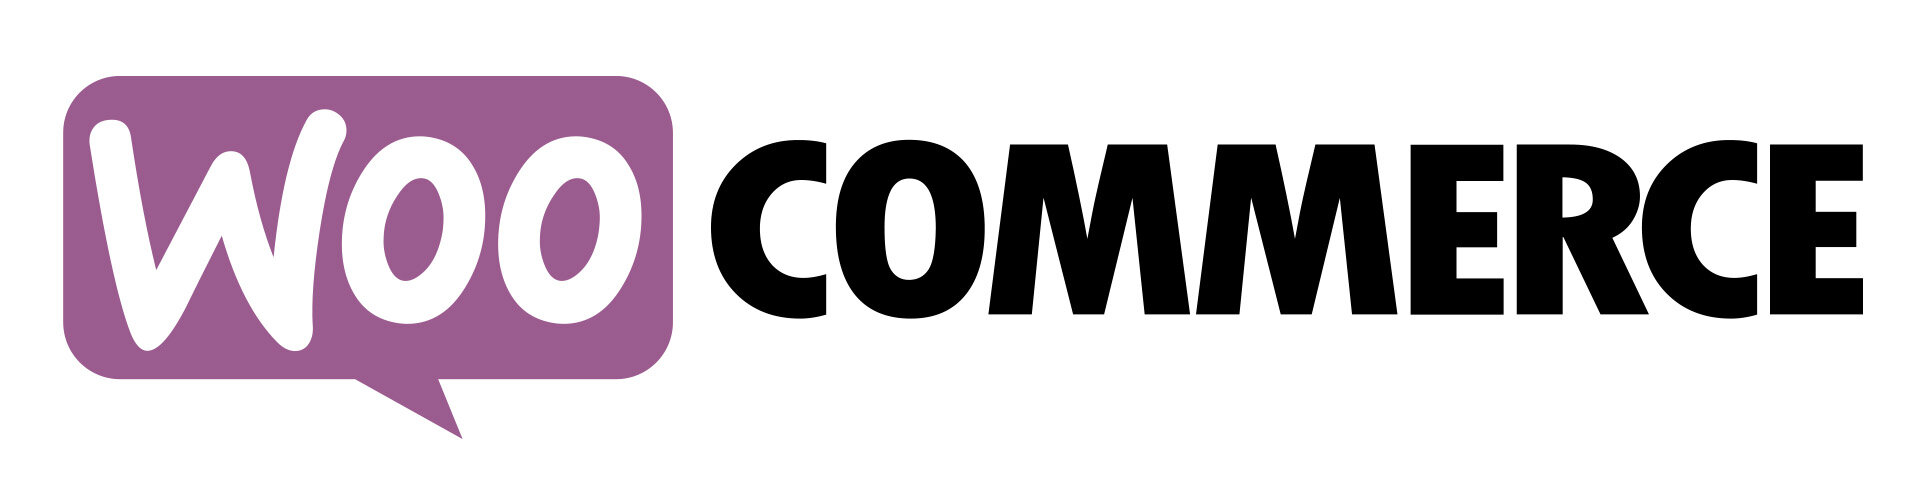 woocommerce-logo-transparent.jpg